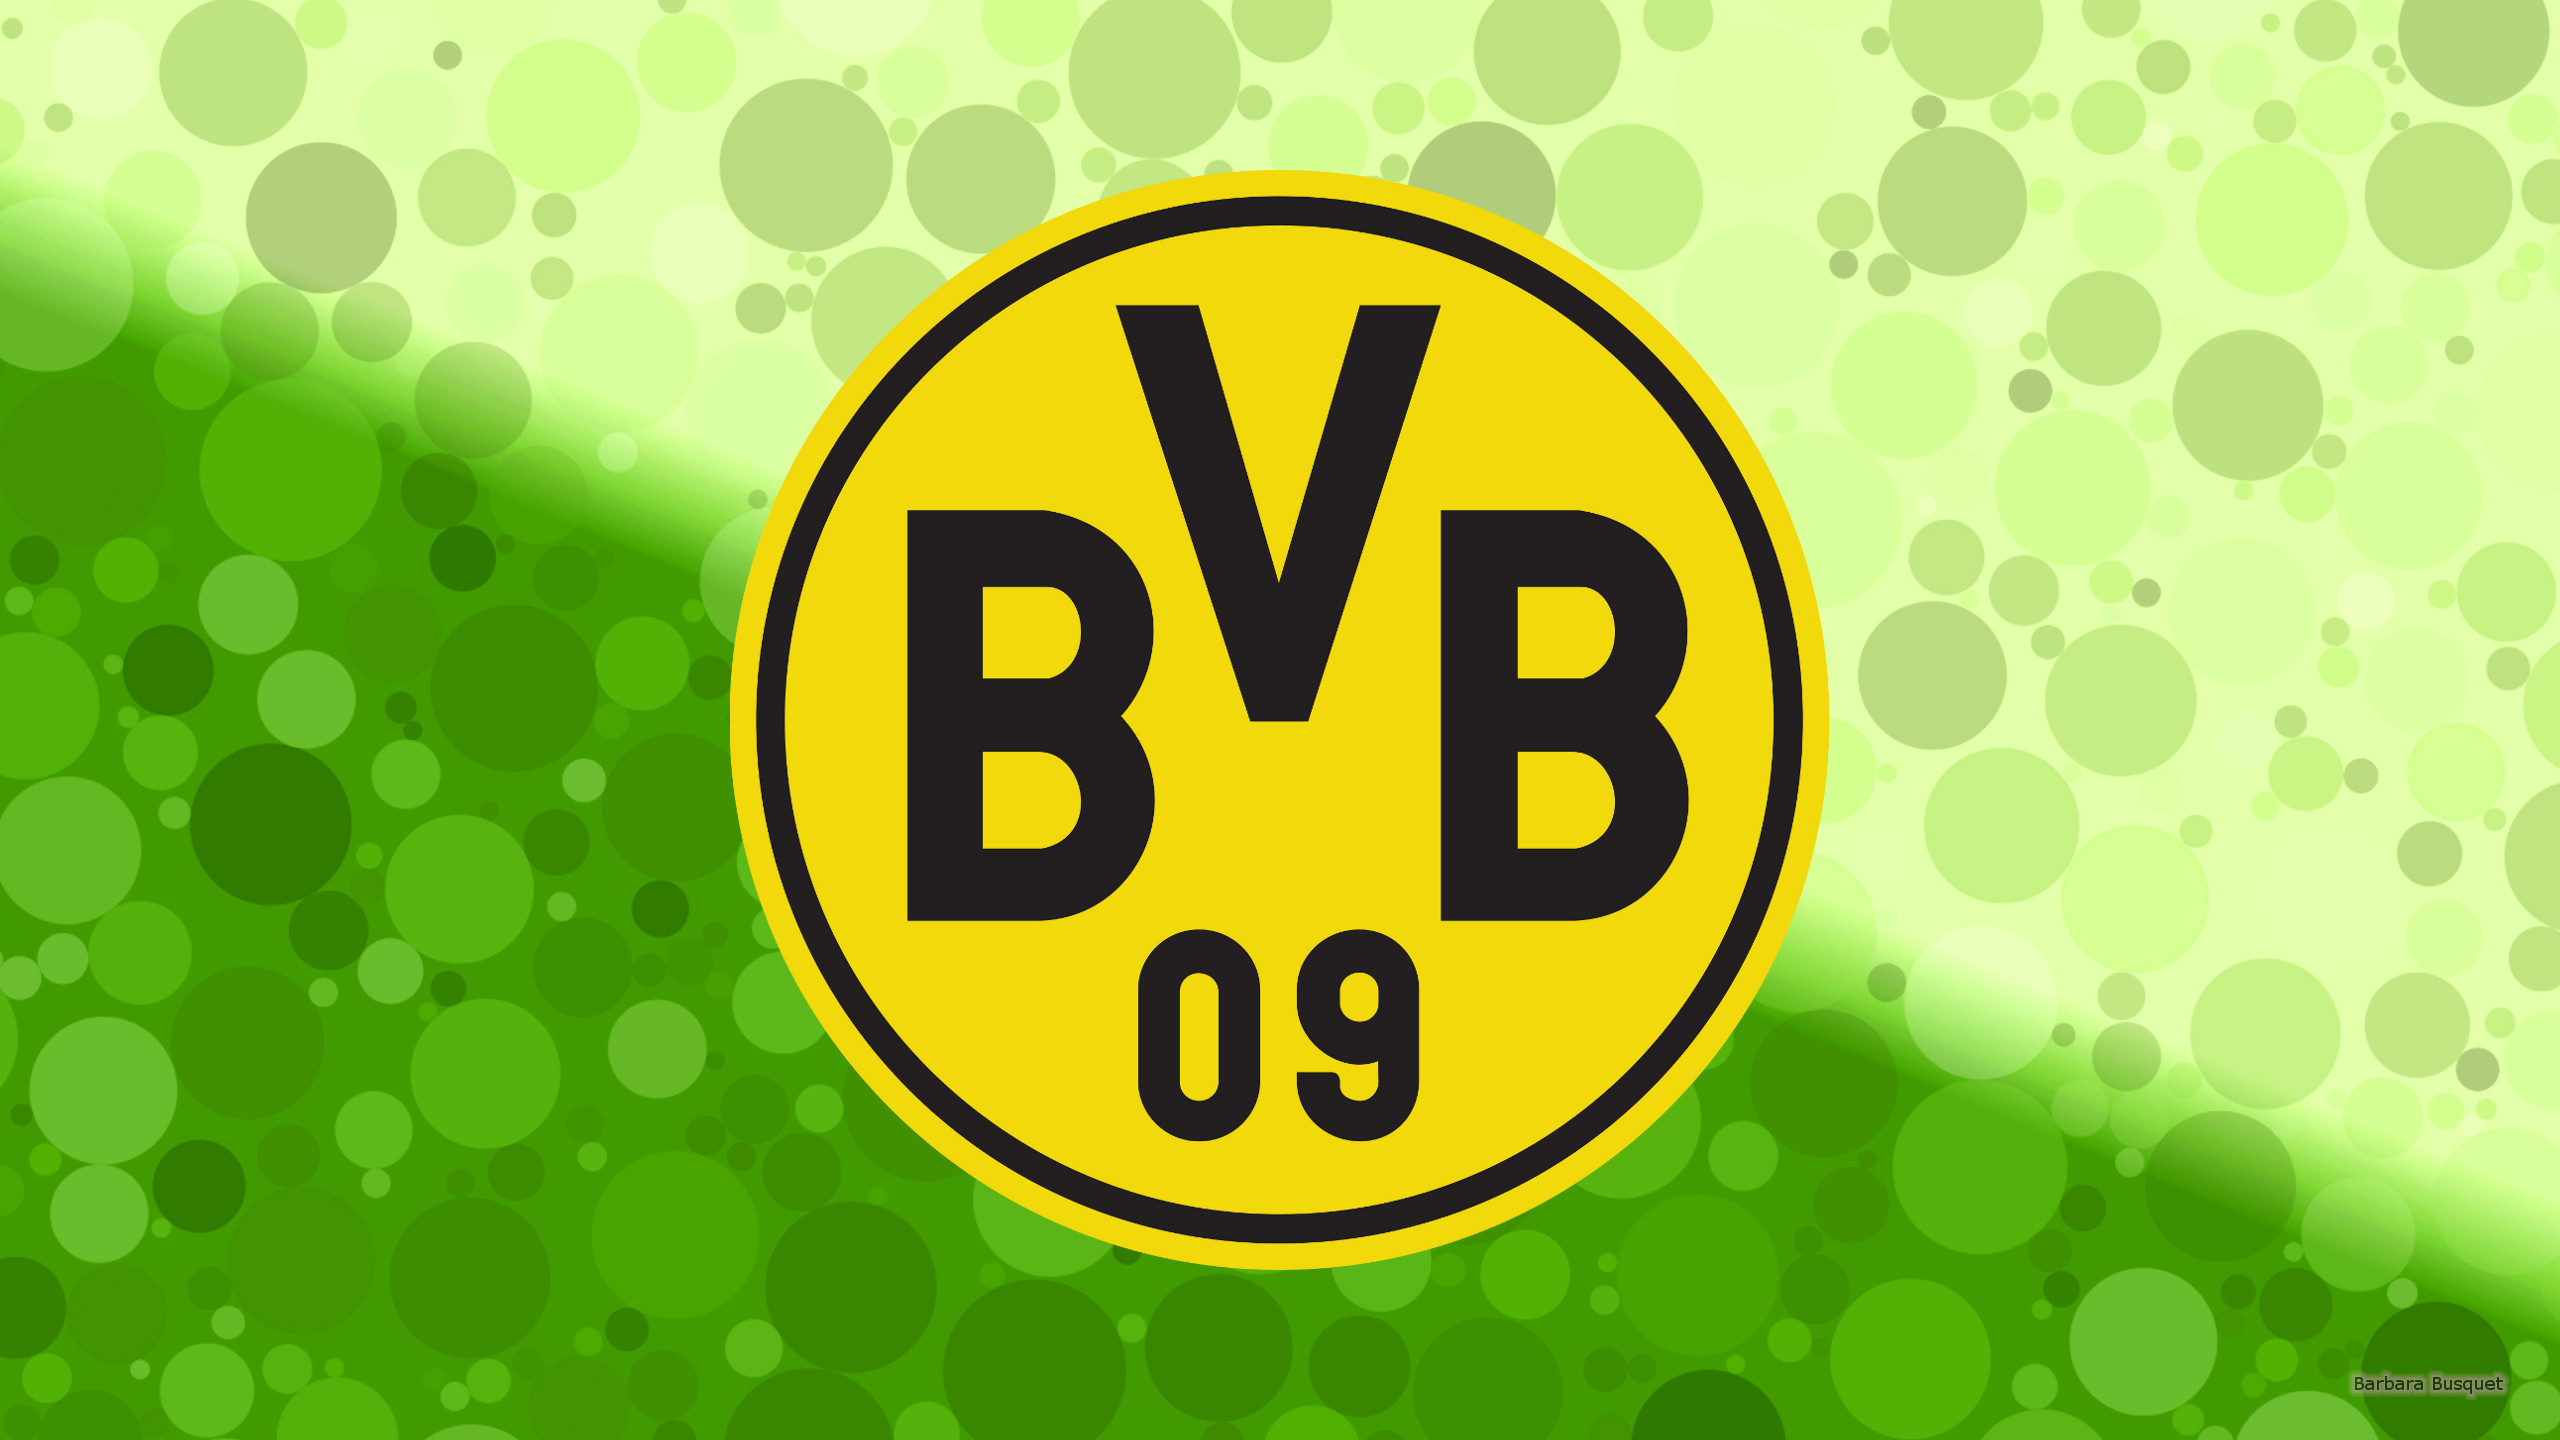 Bvb Borussia Dortmund Emblem Logo Soccer 2560x1440